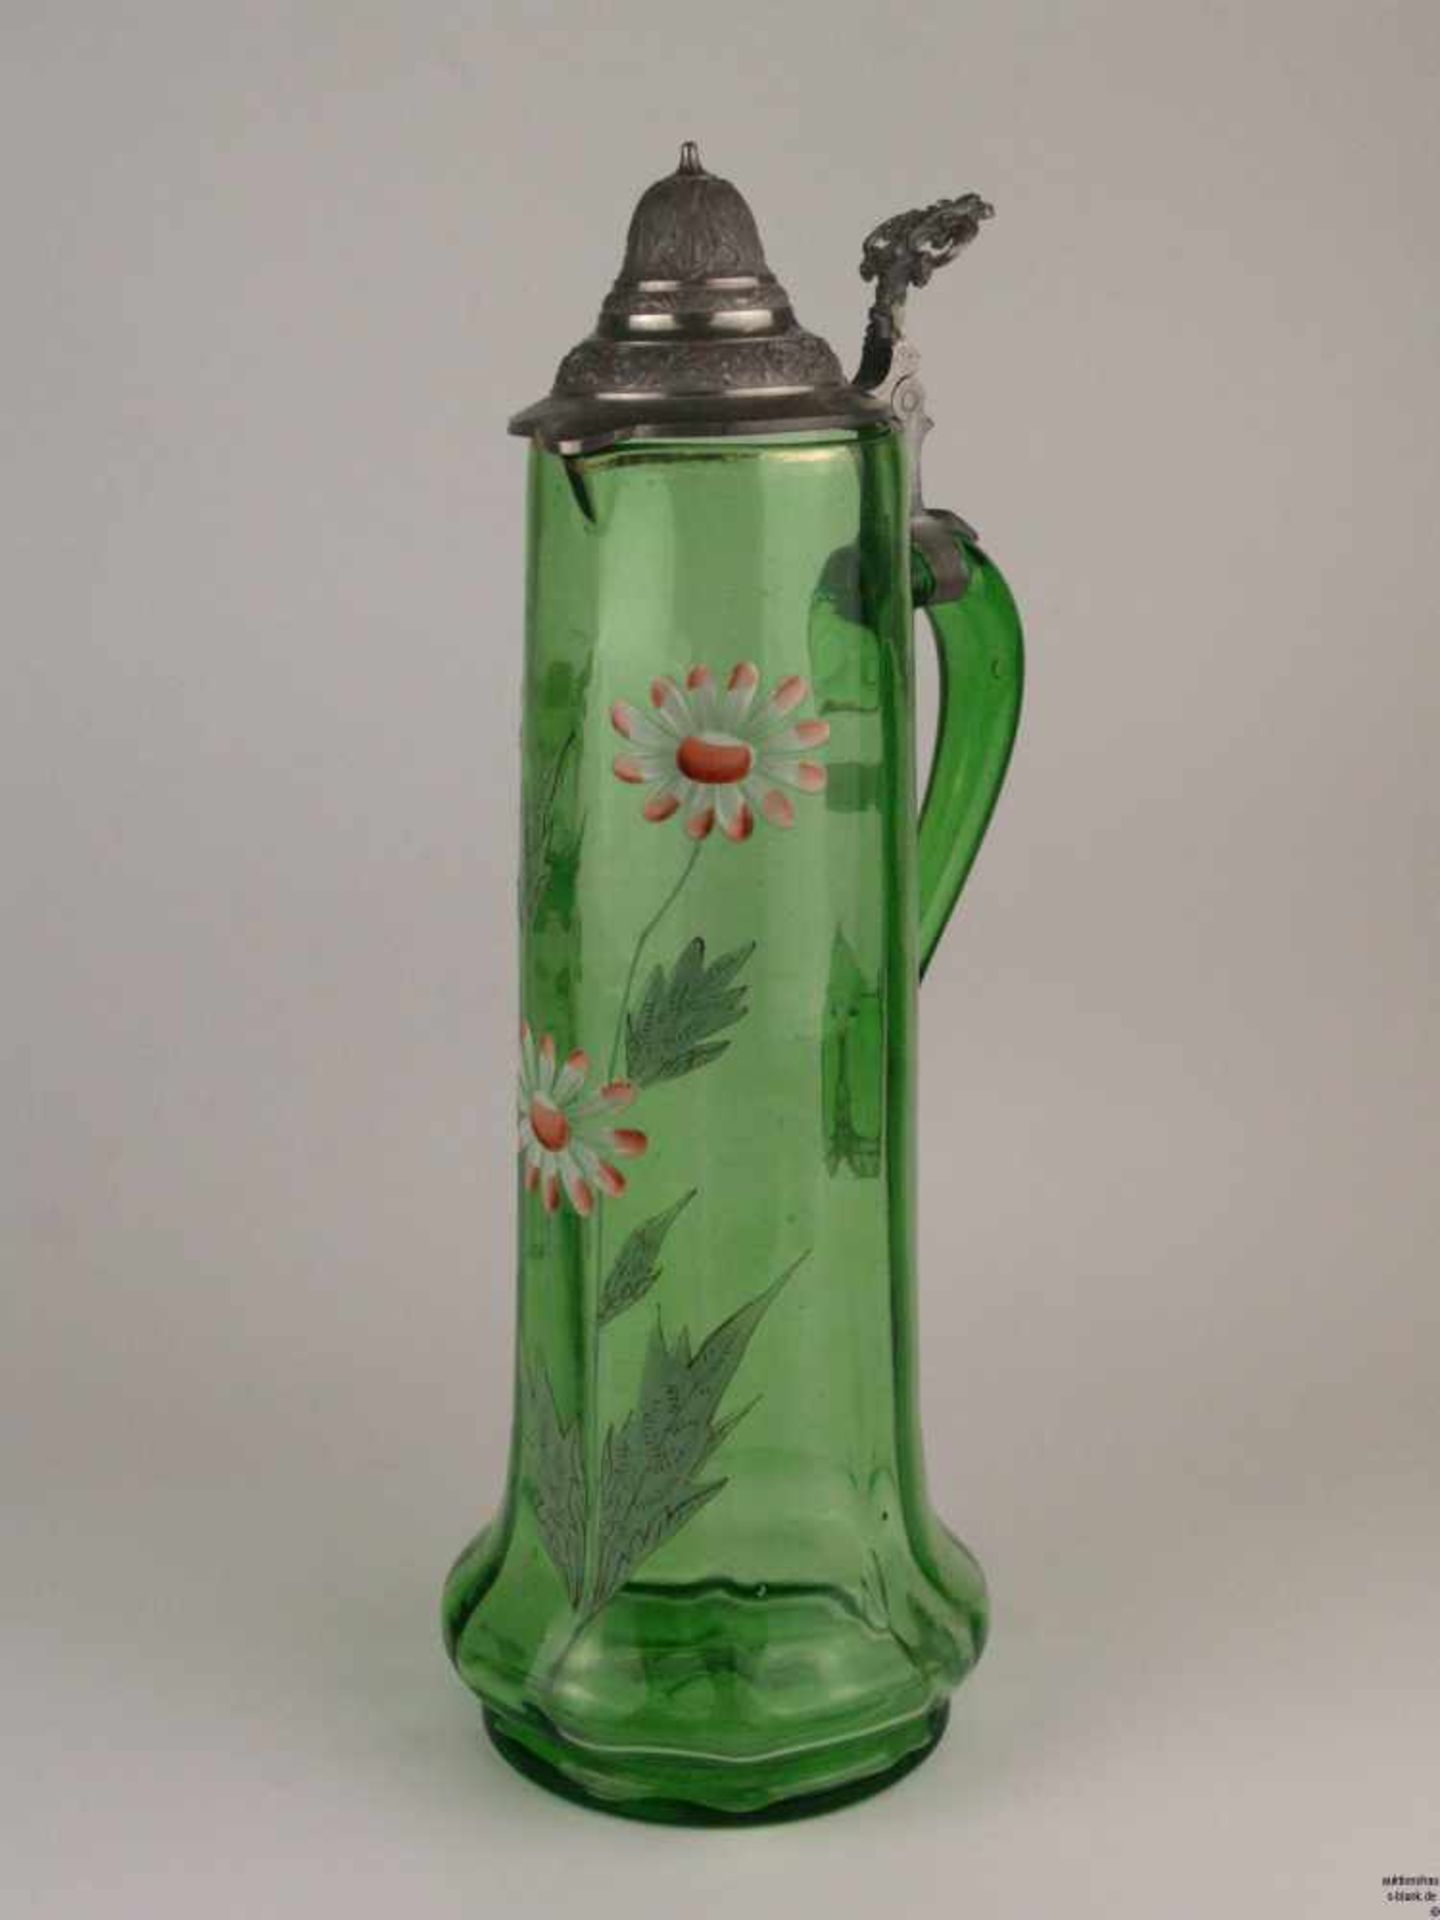 Großer Glaskrug mit Zinndeckel - Grüner Glaskrug mit polychromer Emailmalerei, Blumenmuster,